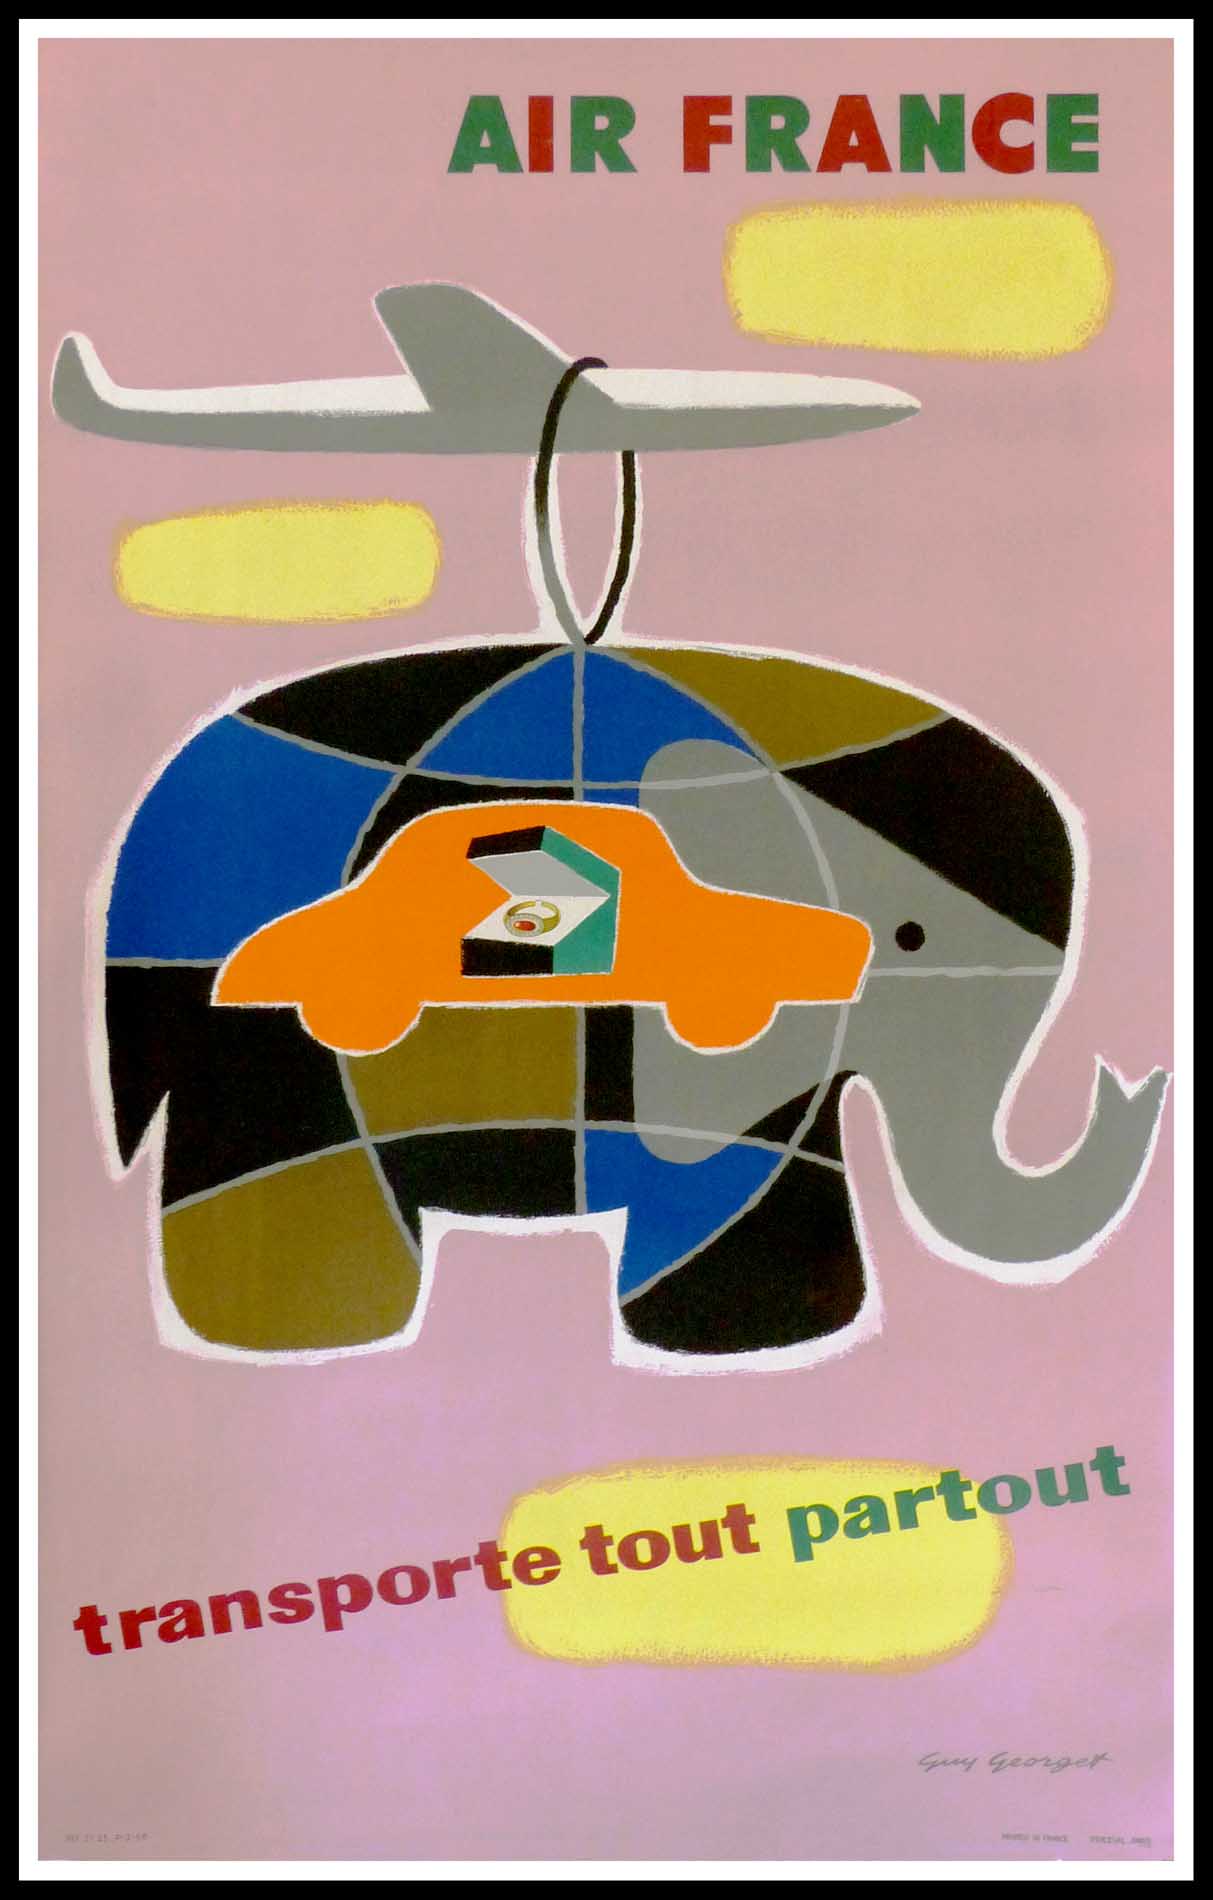 (alt="original vintage travel poster, AIR FRANCE, Transporte tout partout, Guy GEORGET, 1958, printed by PERCEVAL")